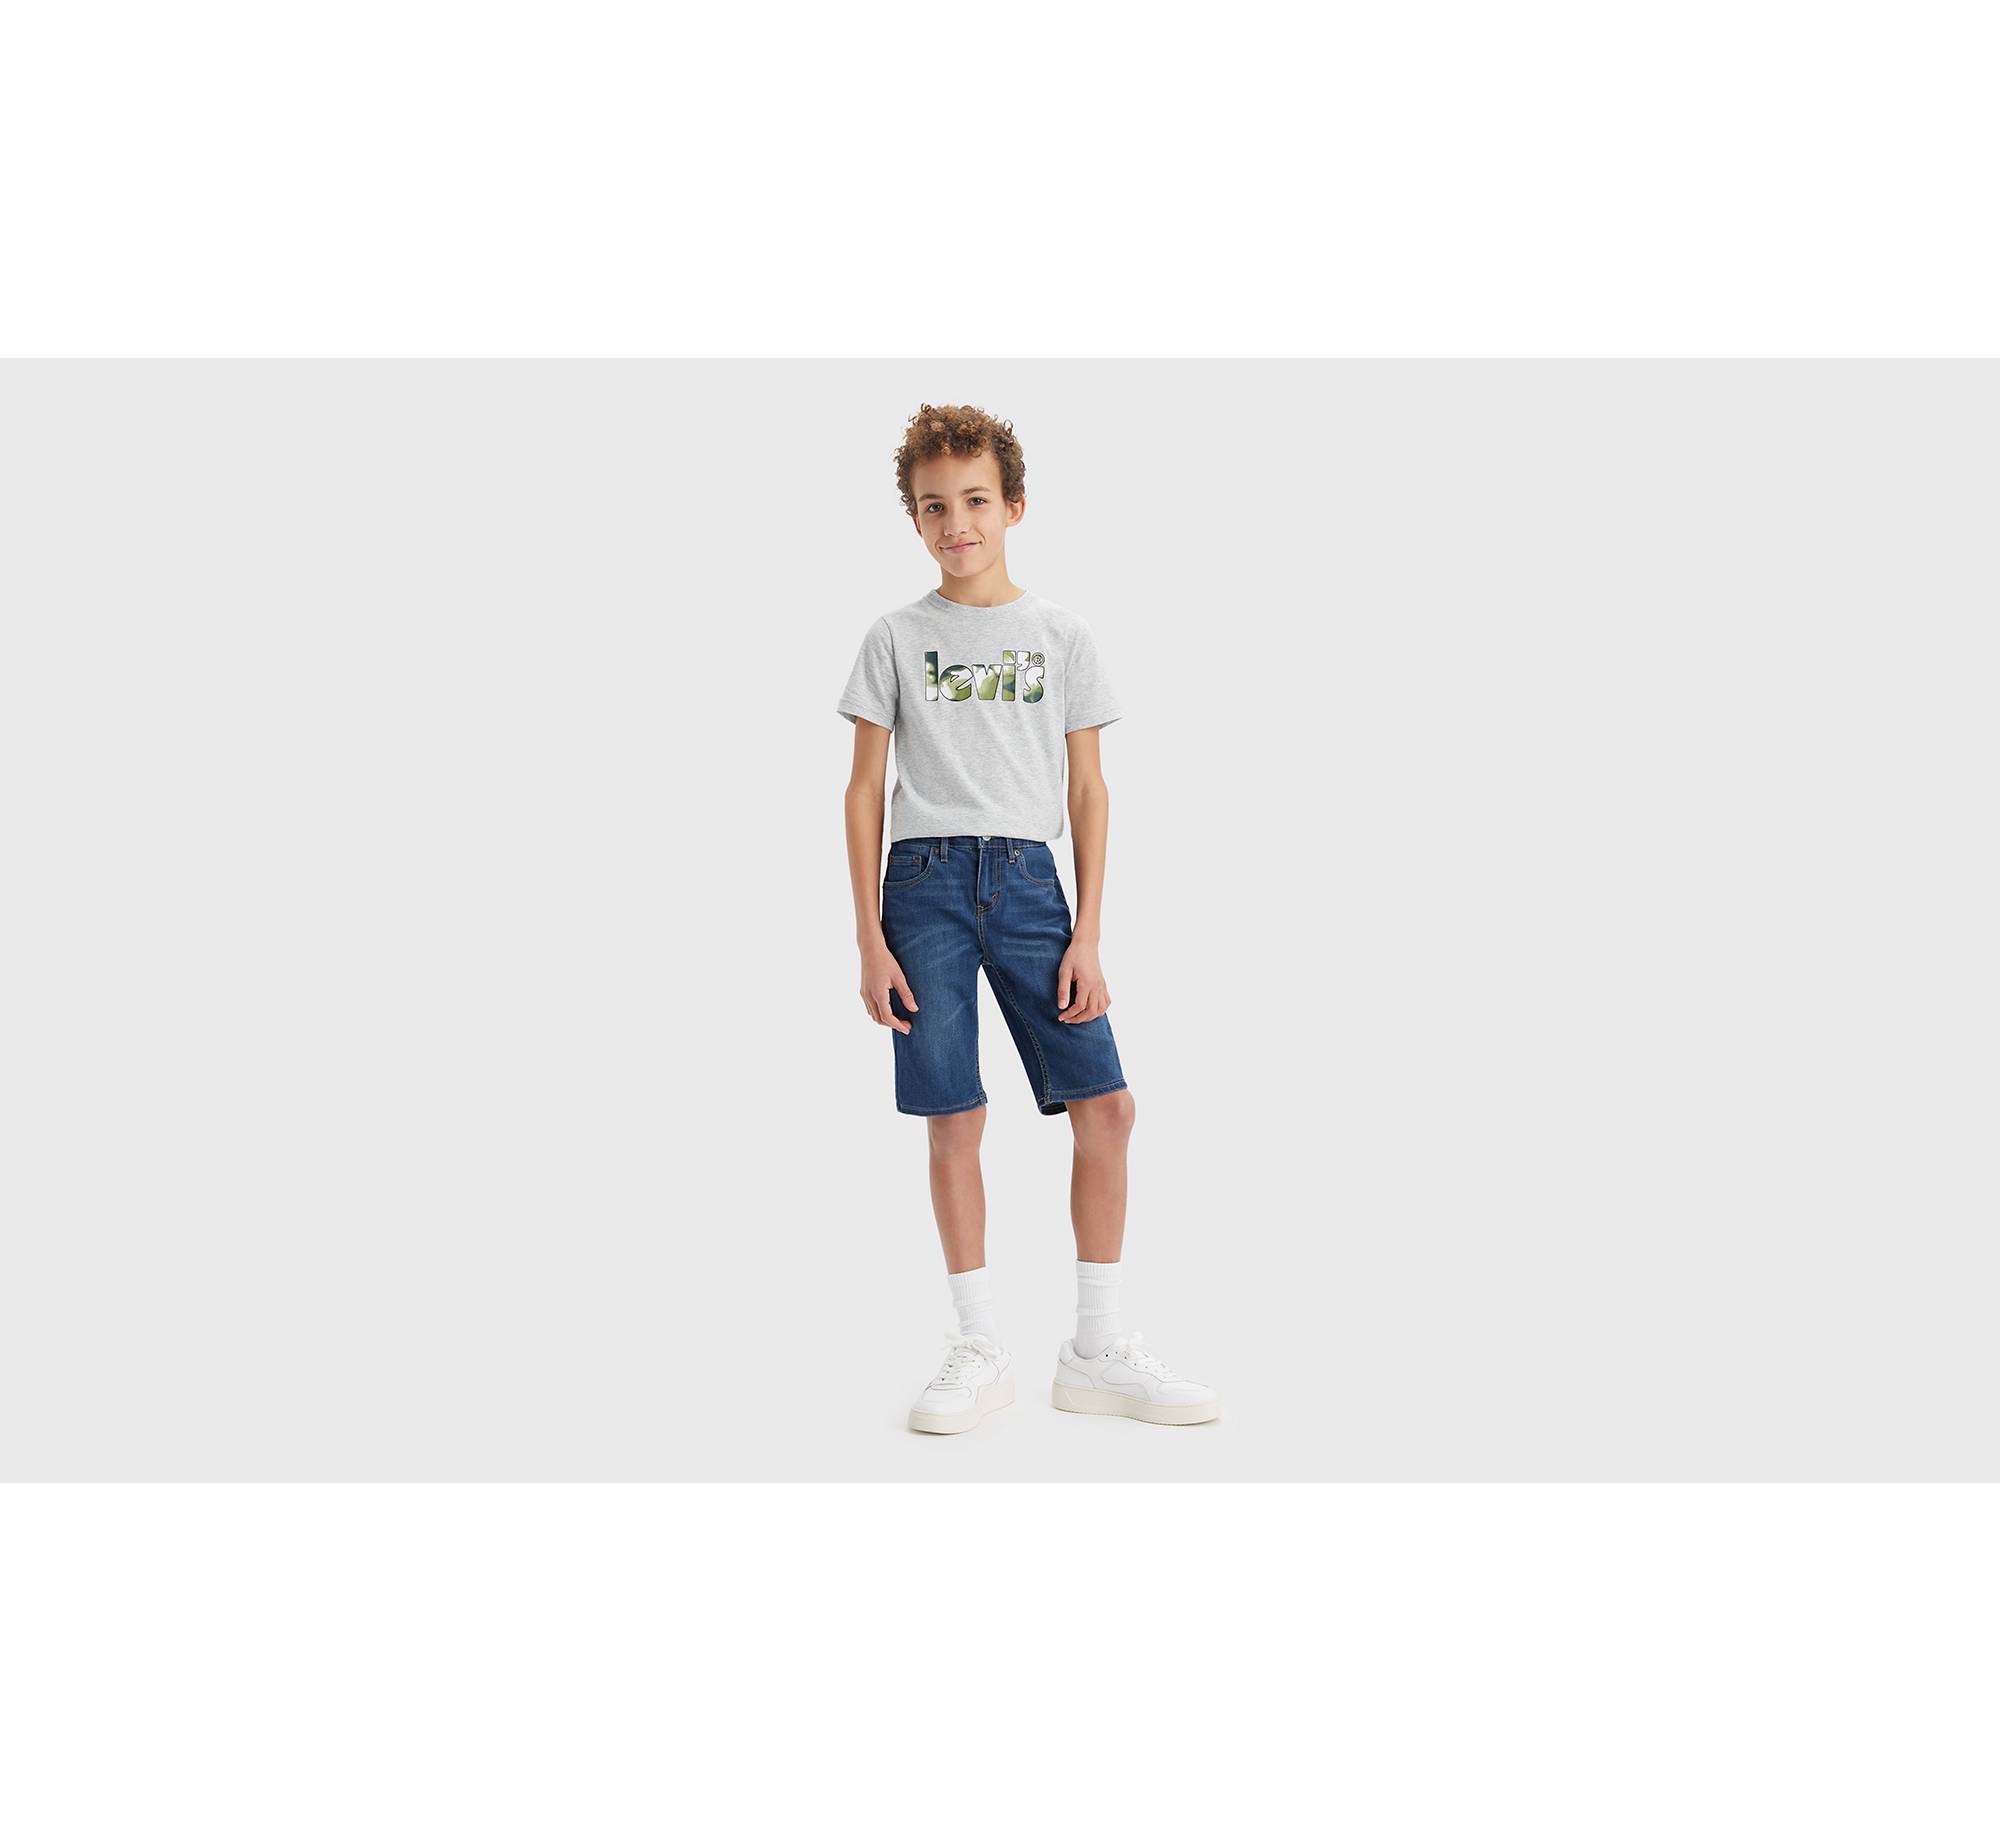 Leichte Slim Fit Bio-Funktions-Shorts 1